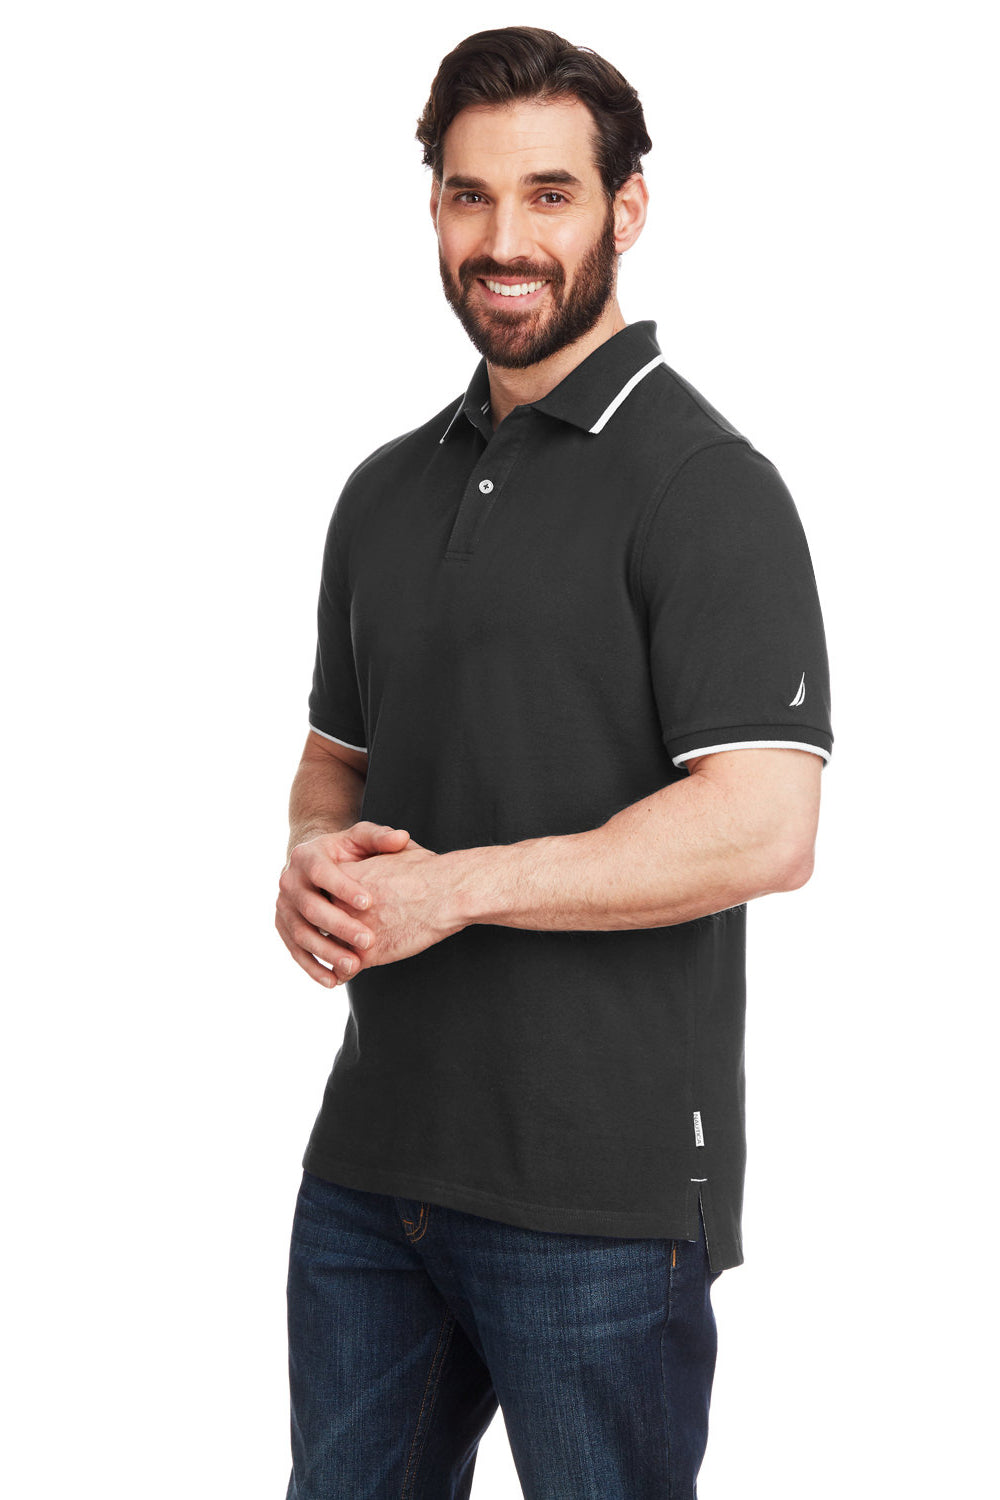 Nautica N17165 Mens Desk Short Sleeve Polo Shirt Black/White 3Q